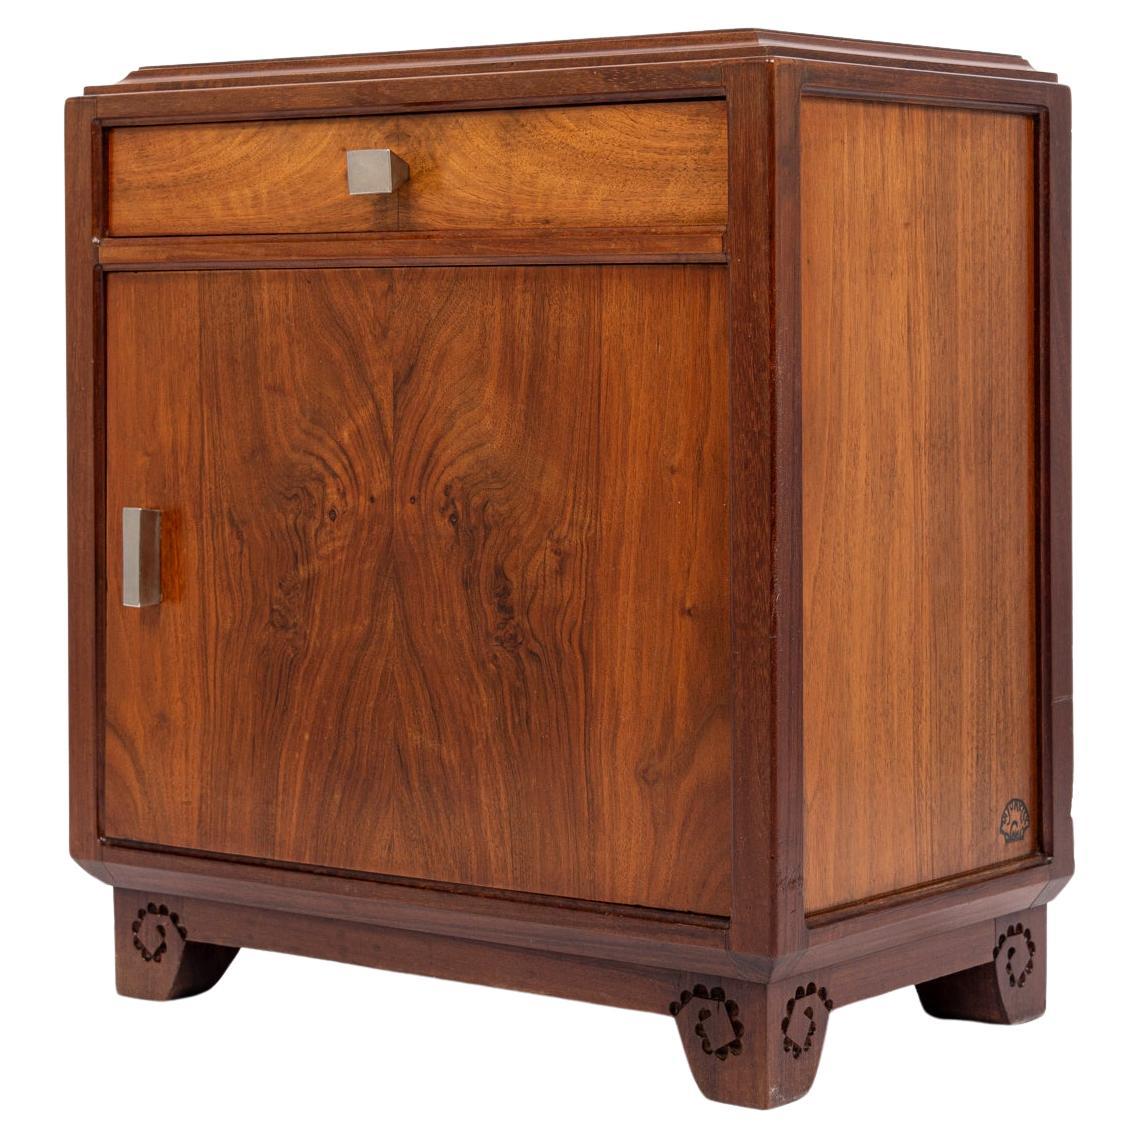 Antique Art Nouveau Small Wooden Cabinet by Majorelle, France, Signed For Sale